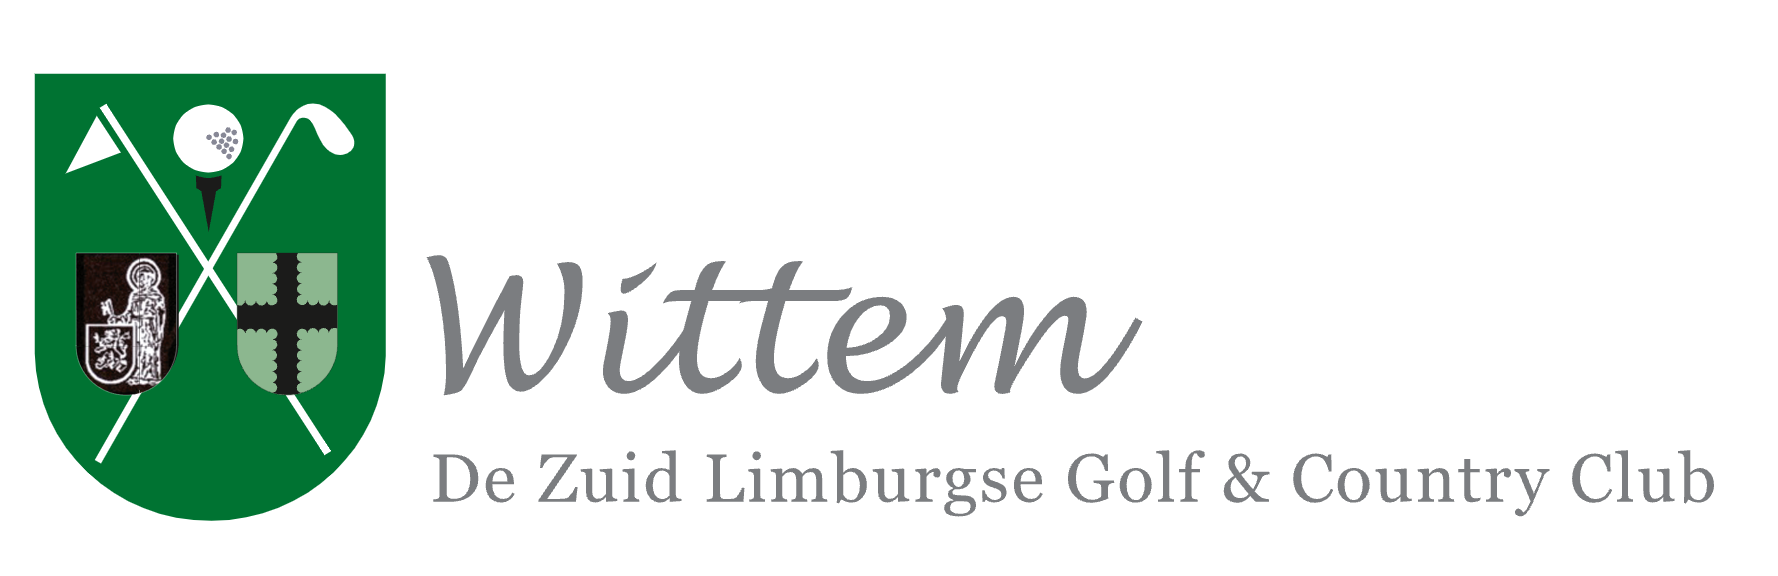 De Zuid Limburgse Golf & Country Club Wittem